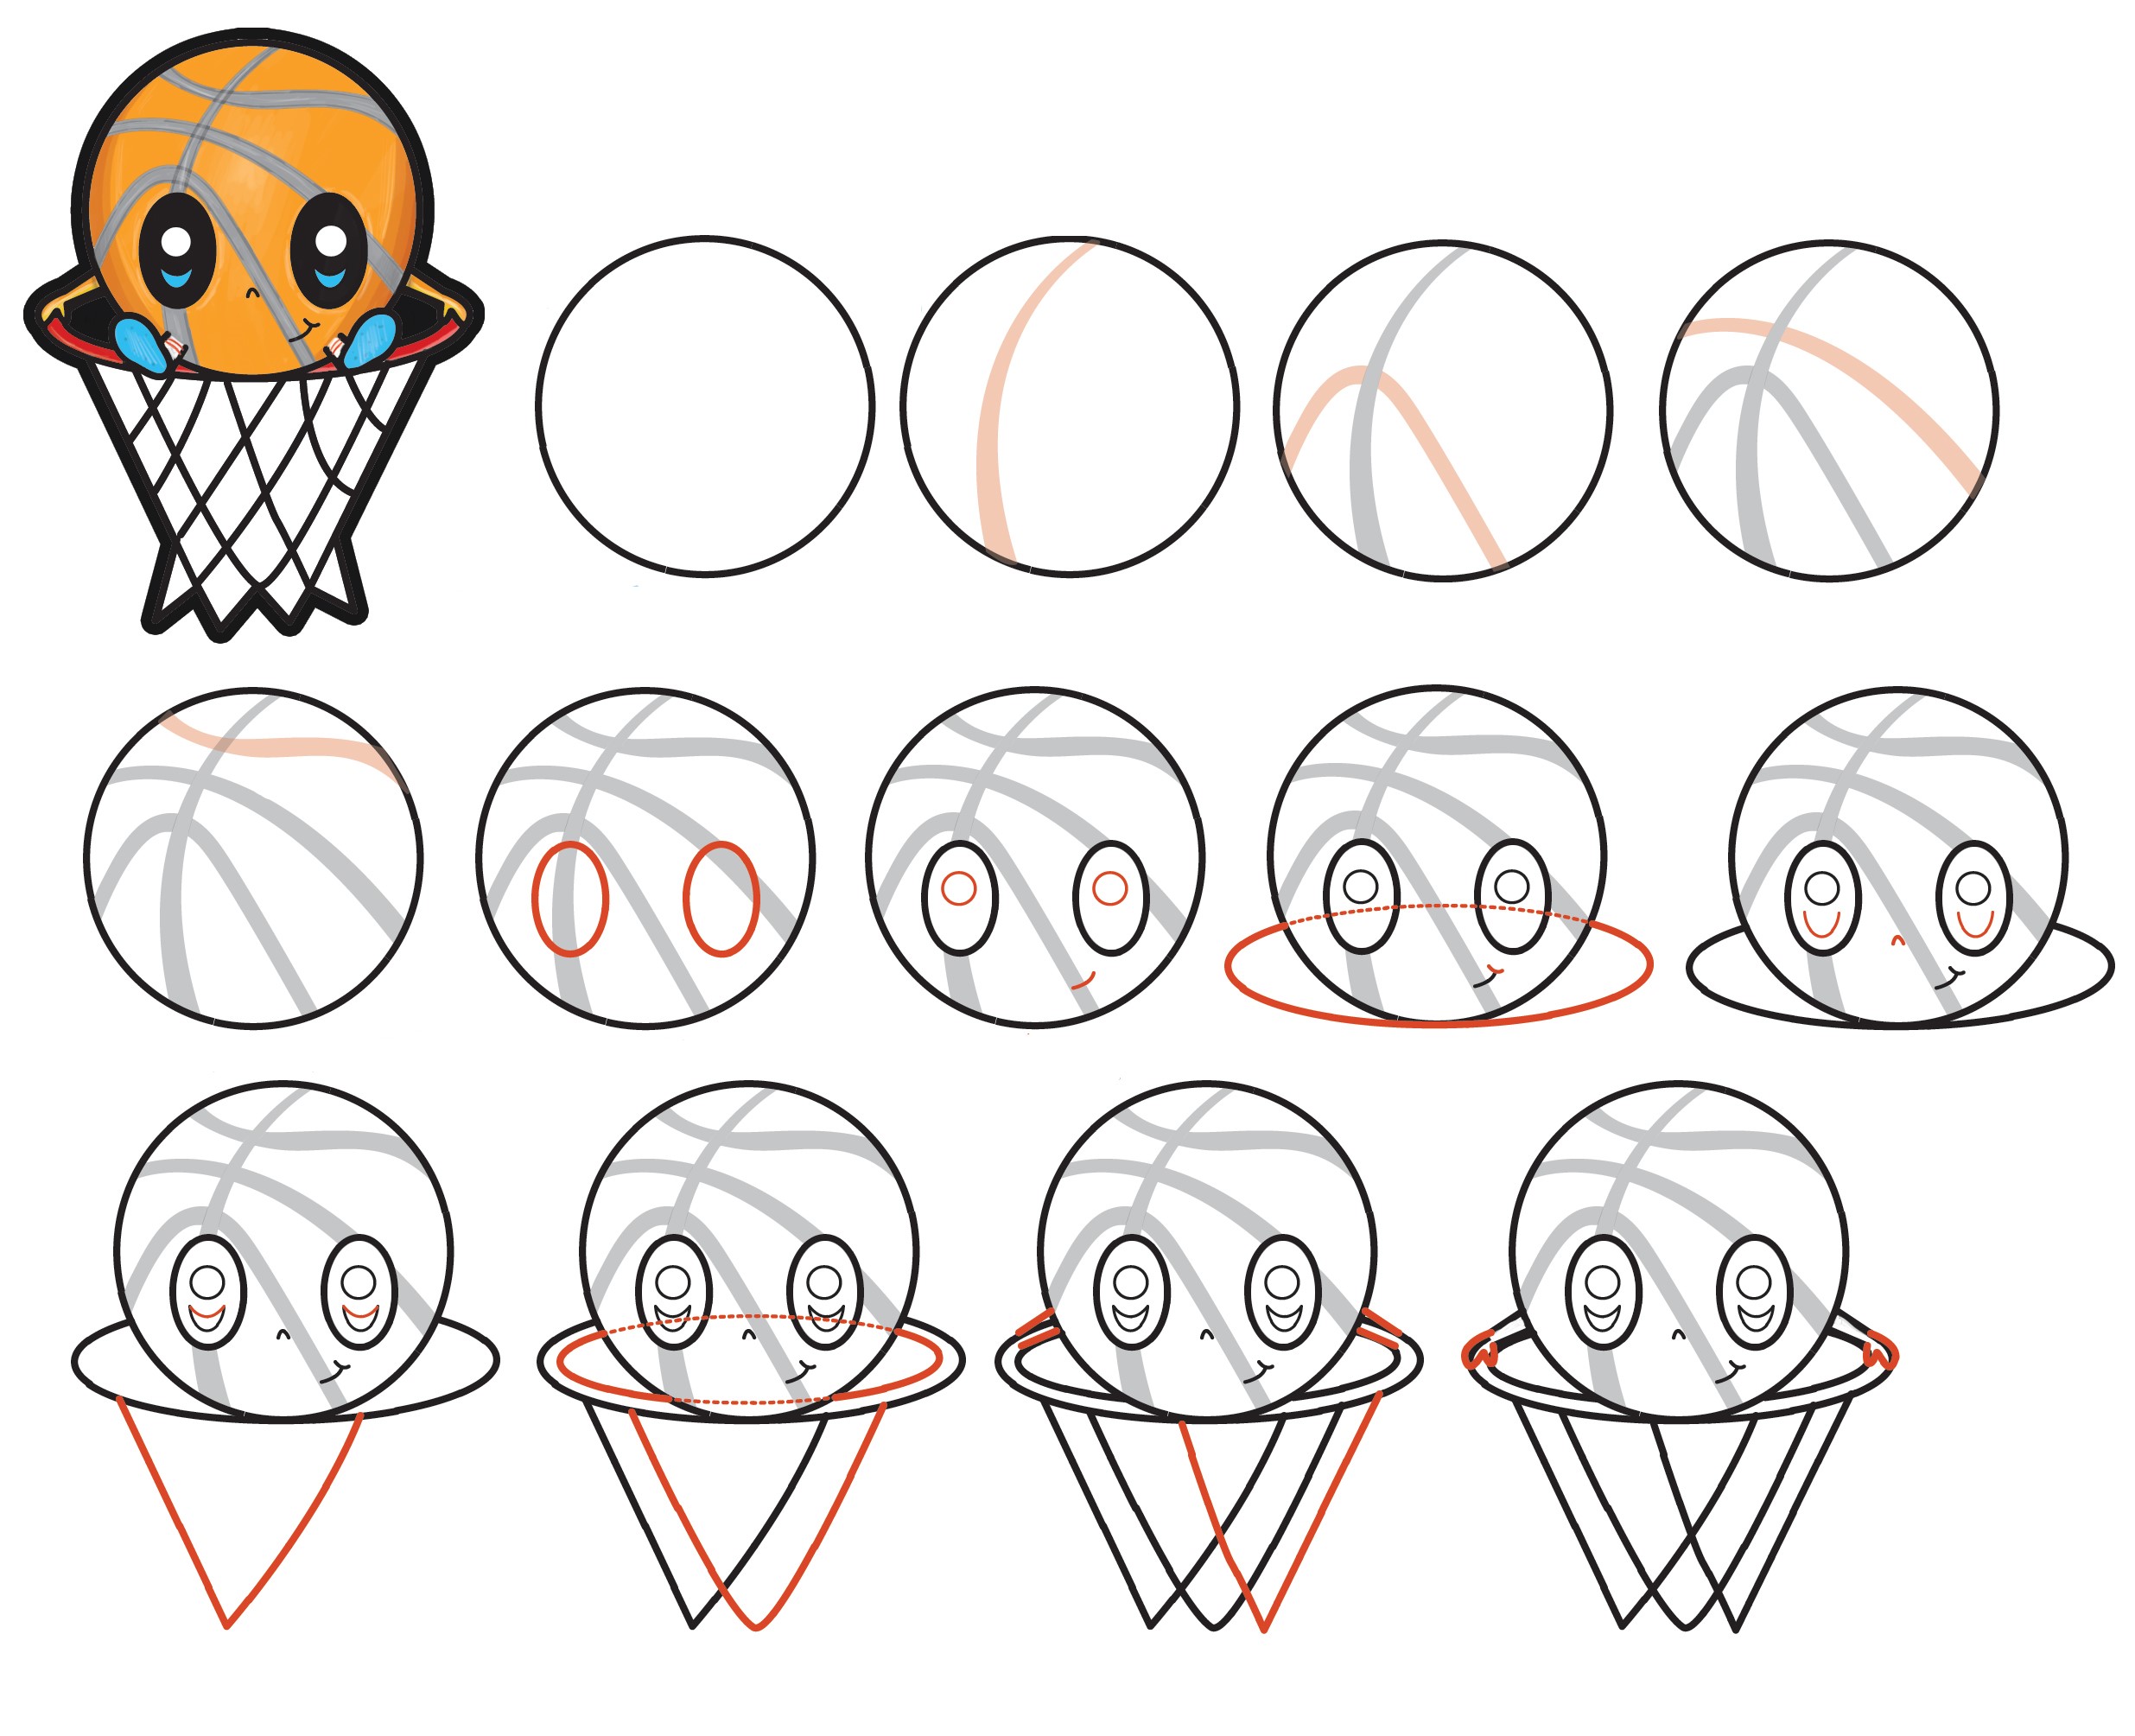 Basket-ball de dessin animé dessin